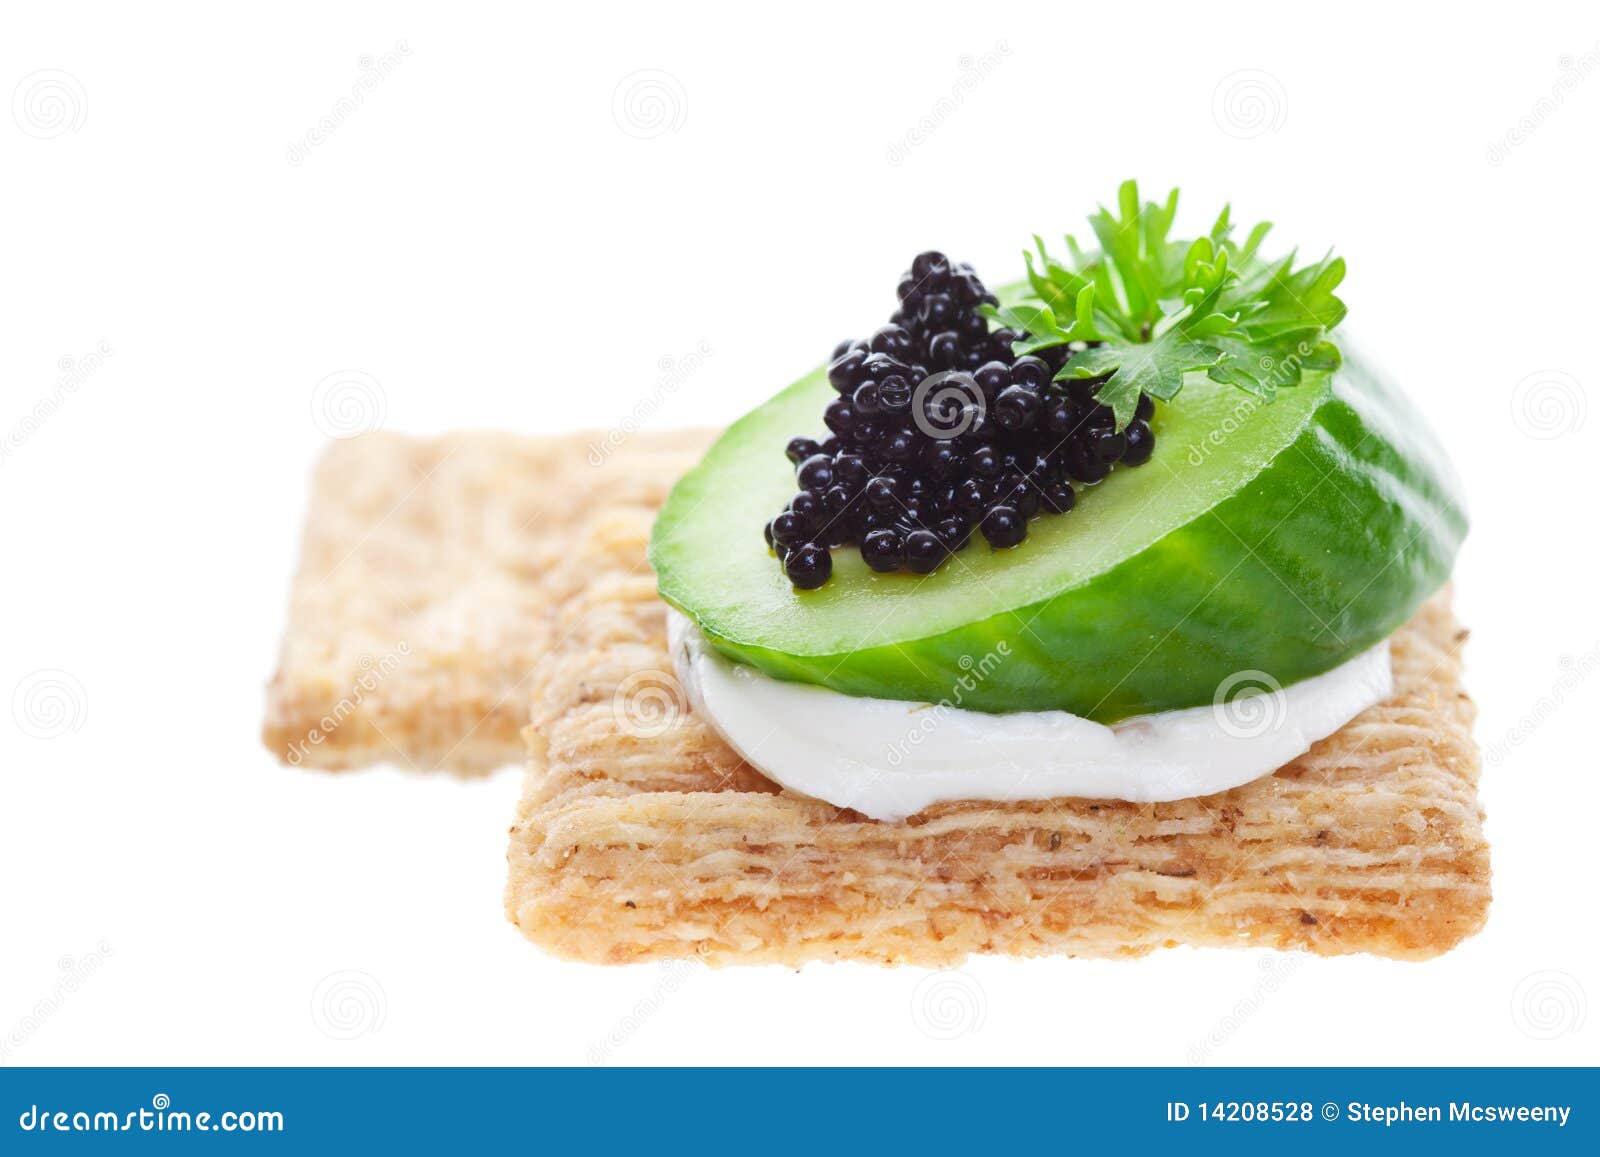 caviar on crackers